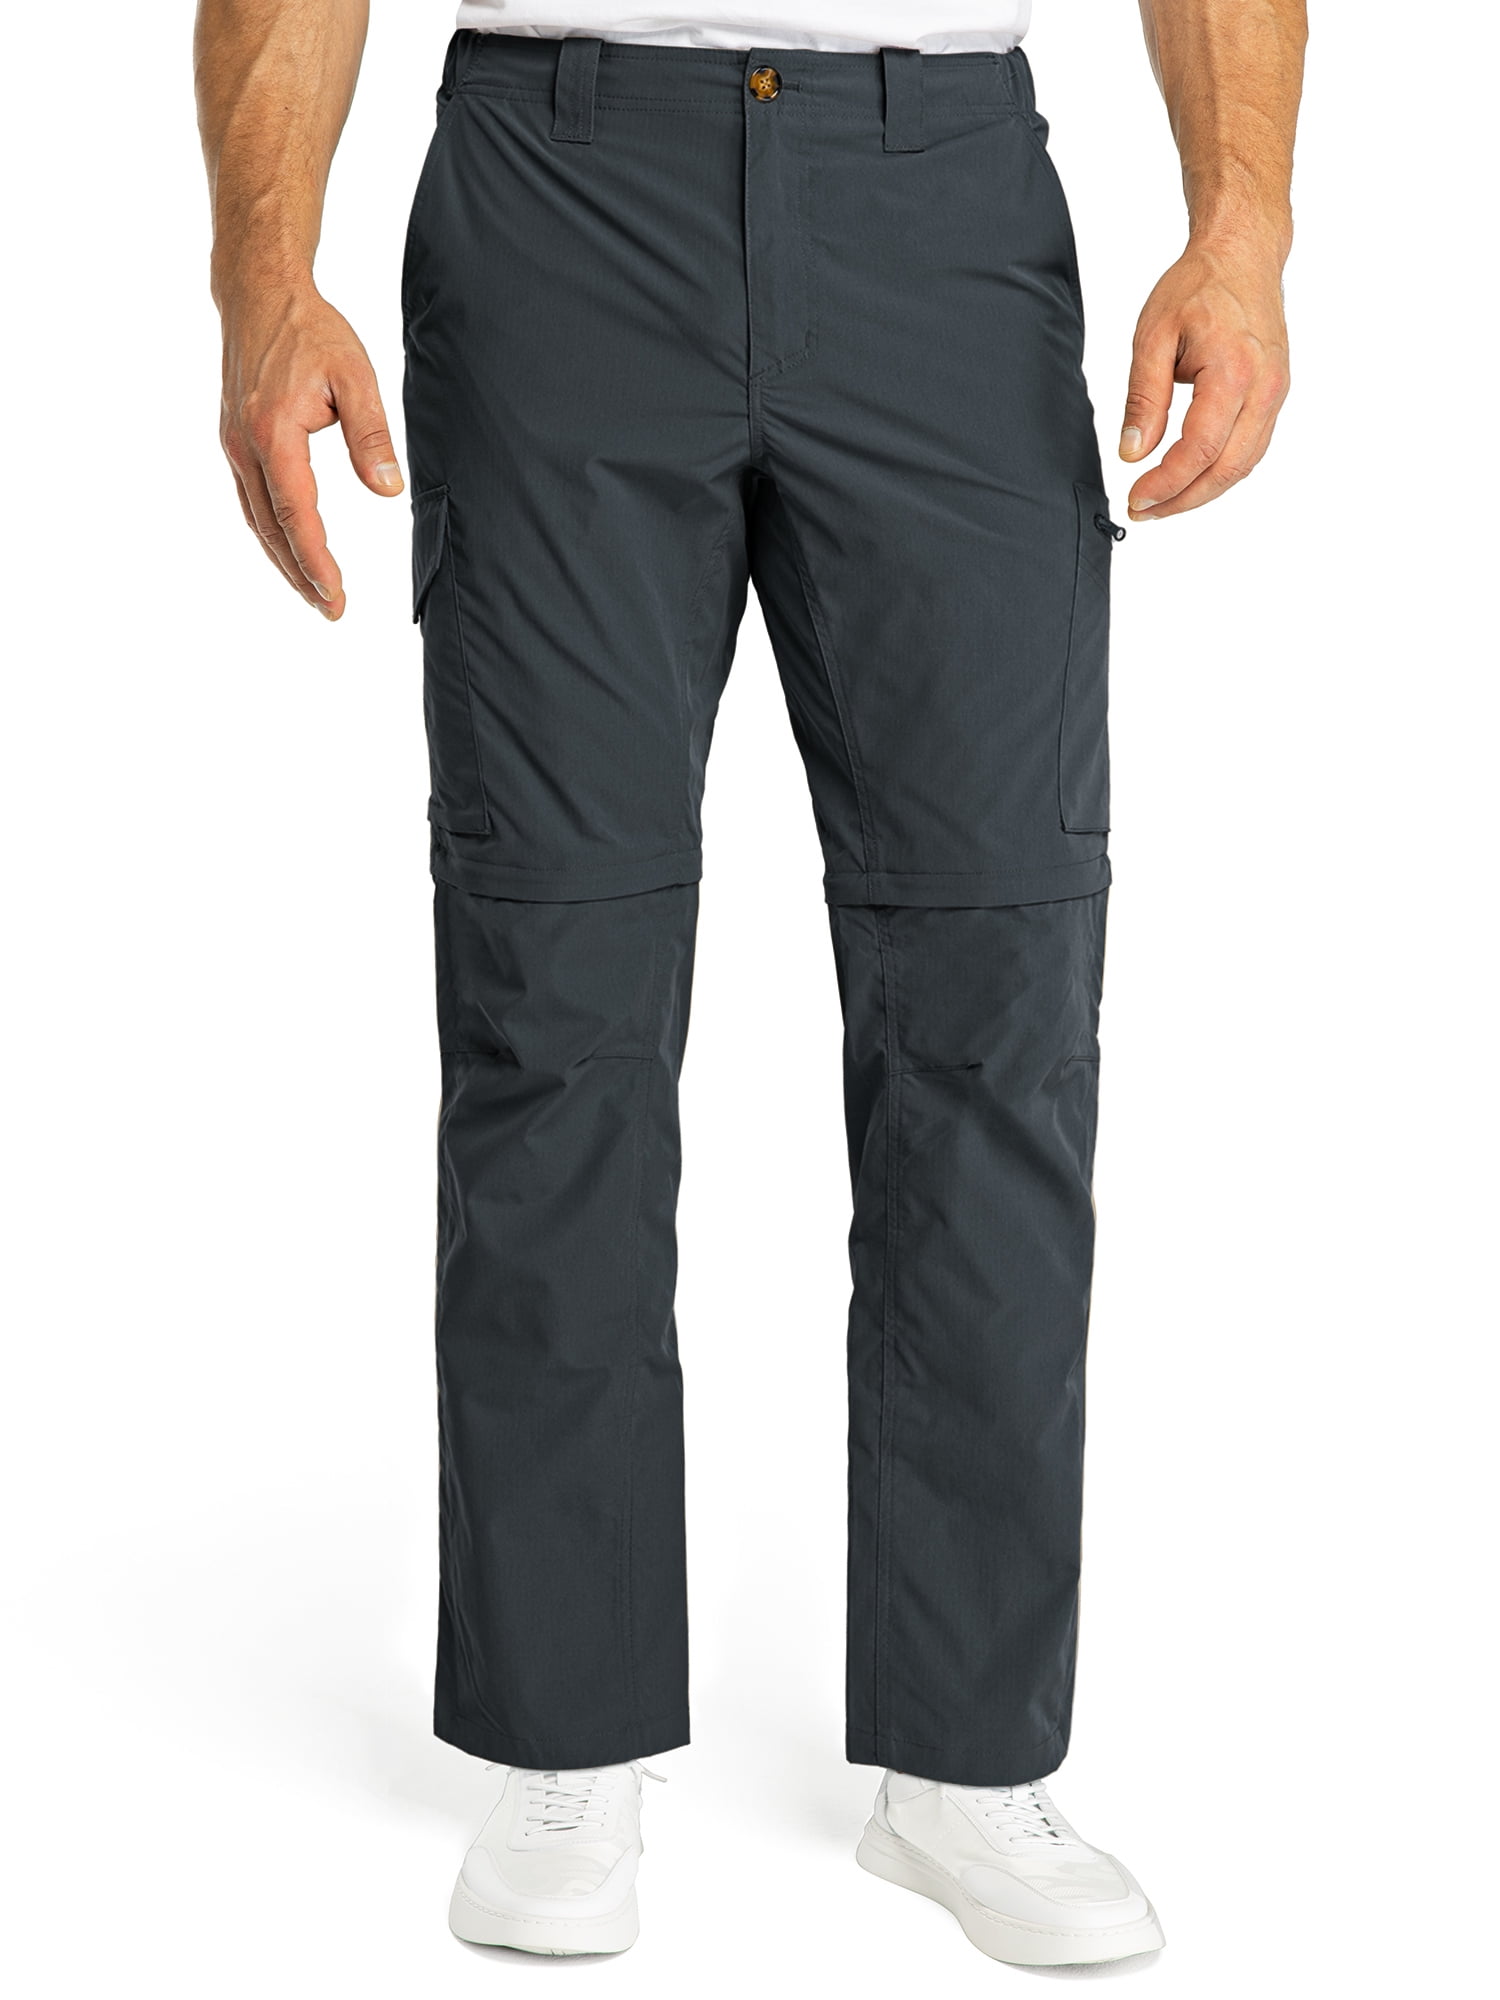 Chrisuno Men's Waterproof Hiking Pant Outdoor Softshell Fleece Lined Cargo Insulated Work Pants